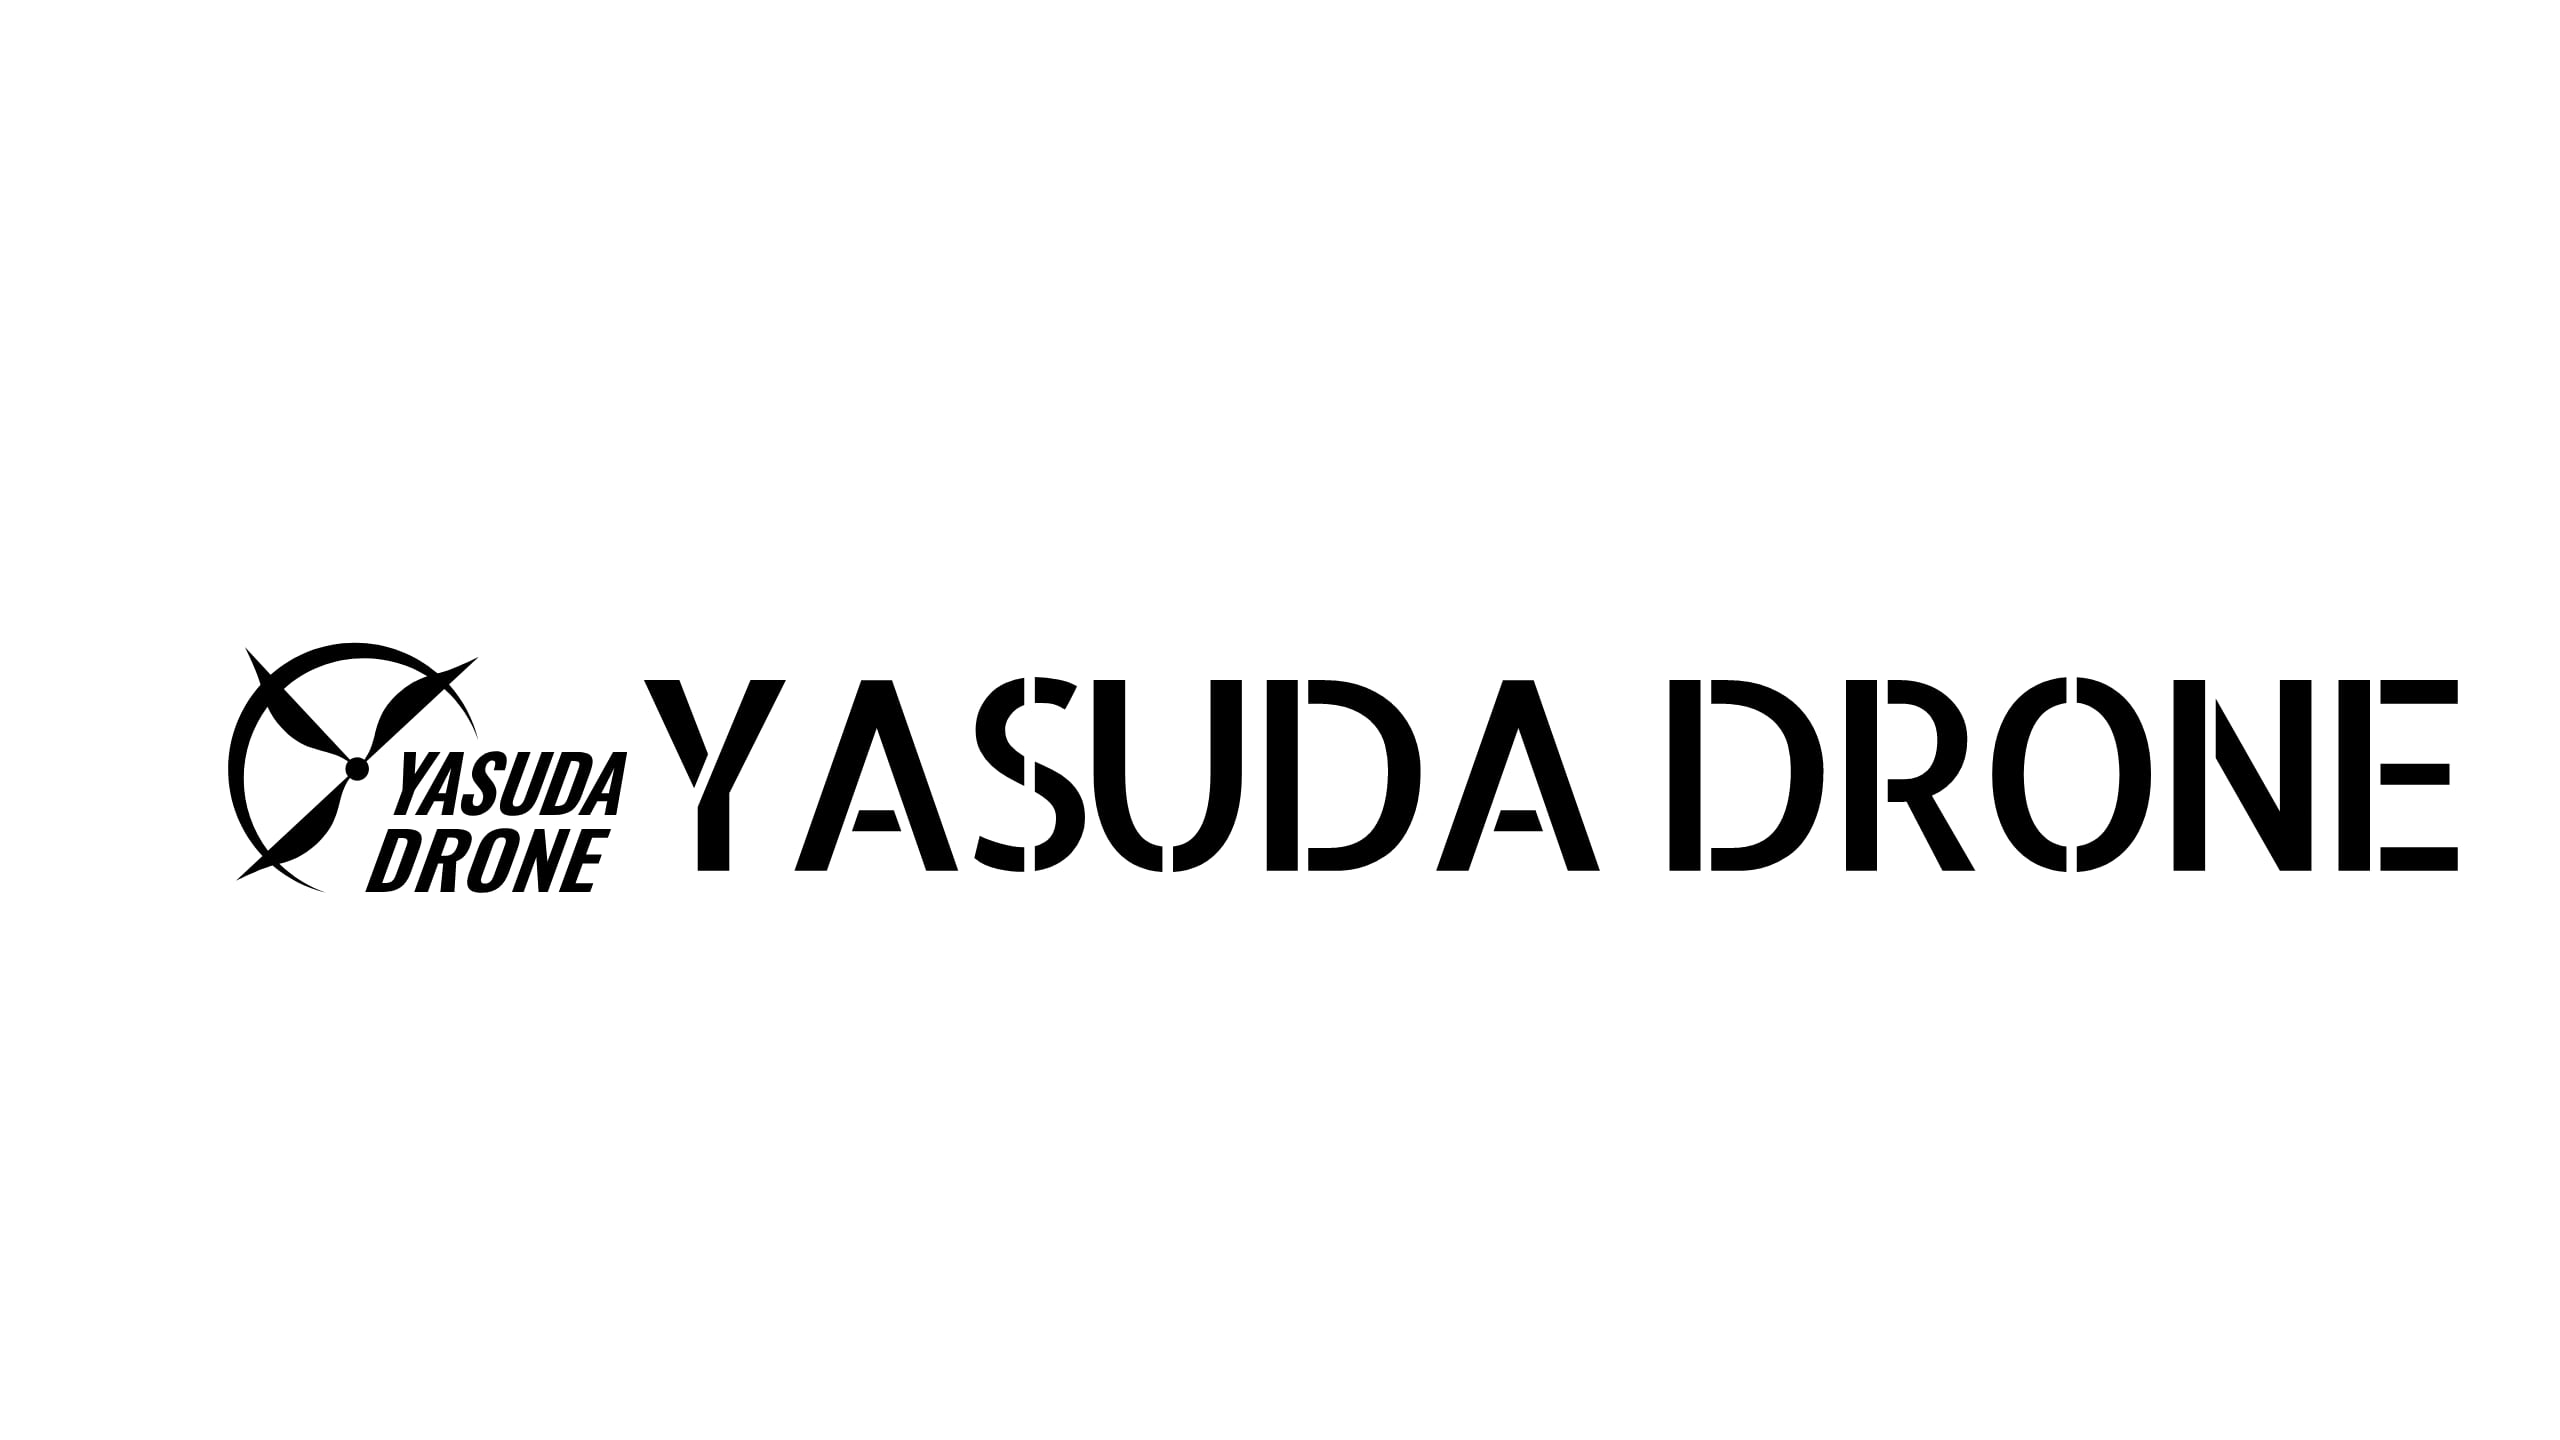 YASUDA DRONE